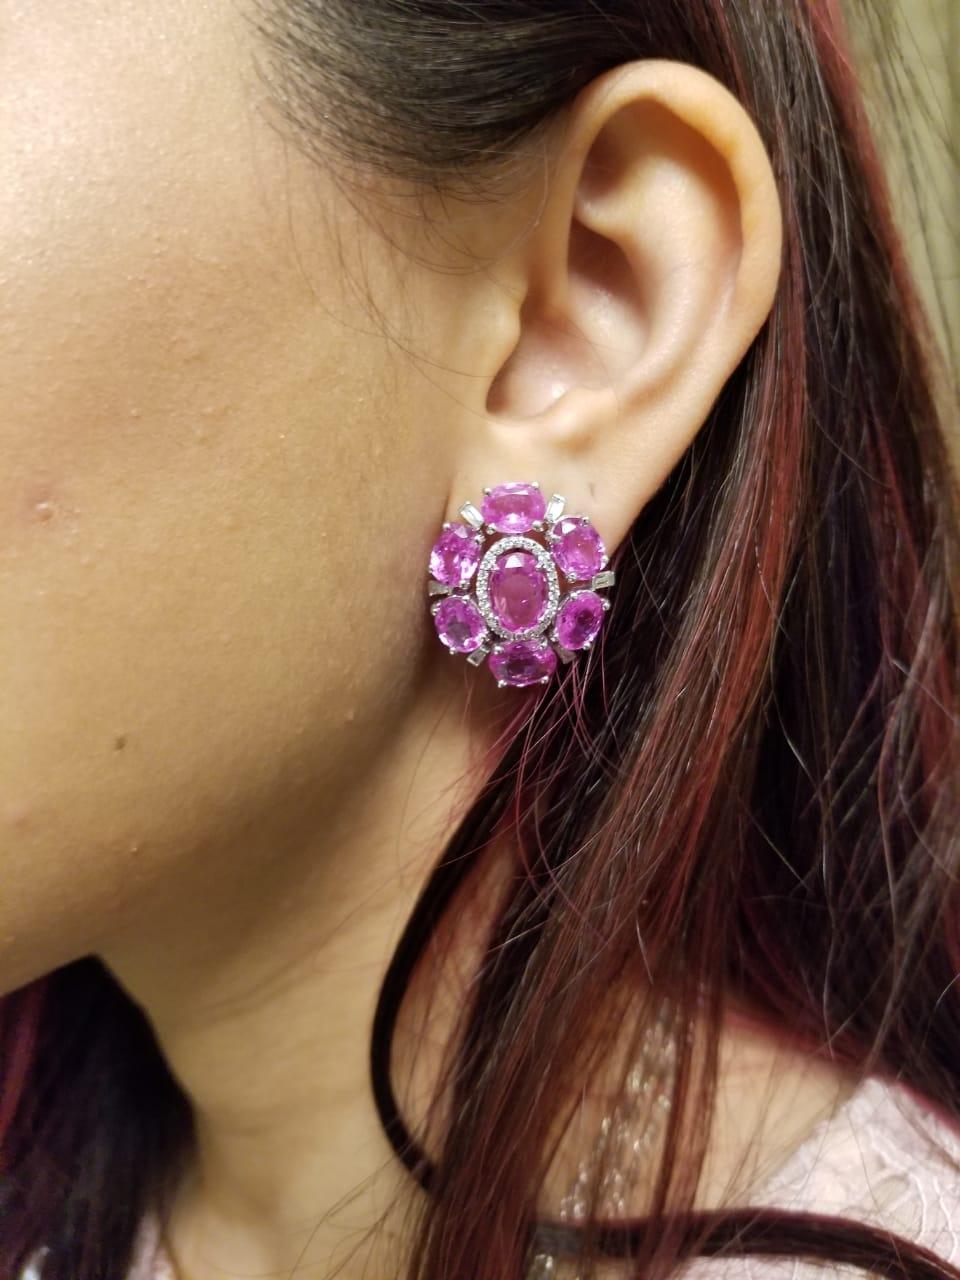 Modern Set in 18K Gold, Rose Cut Pink Sapphire from Madagascar & Diamonds Stud Earrings